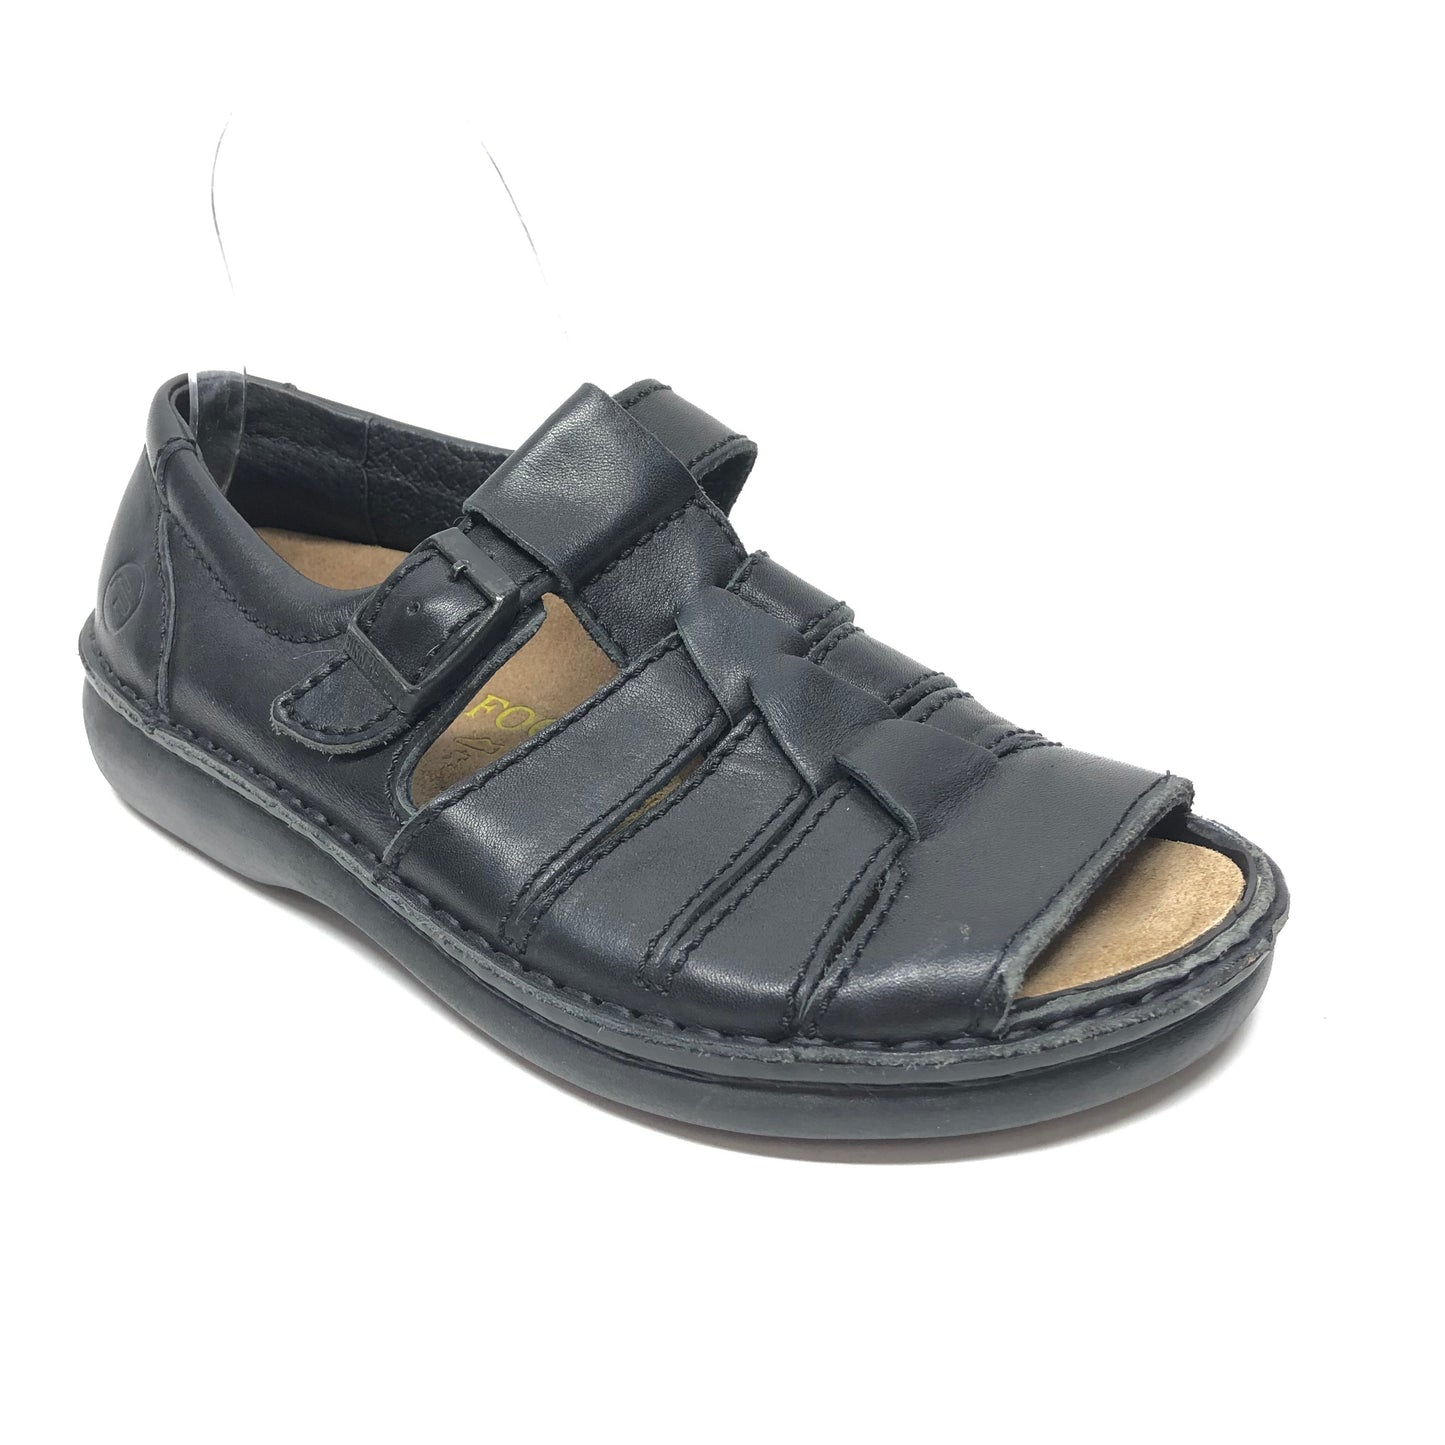 Black Shoes Flats Birkenstock, Size 8